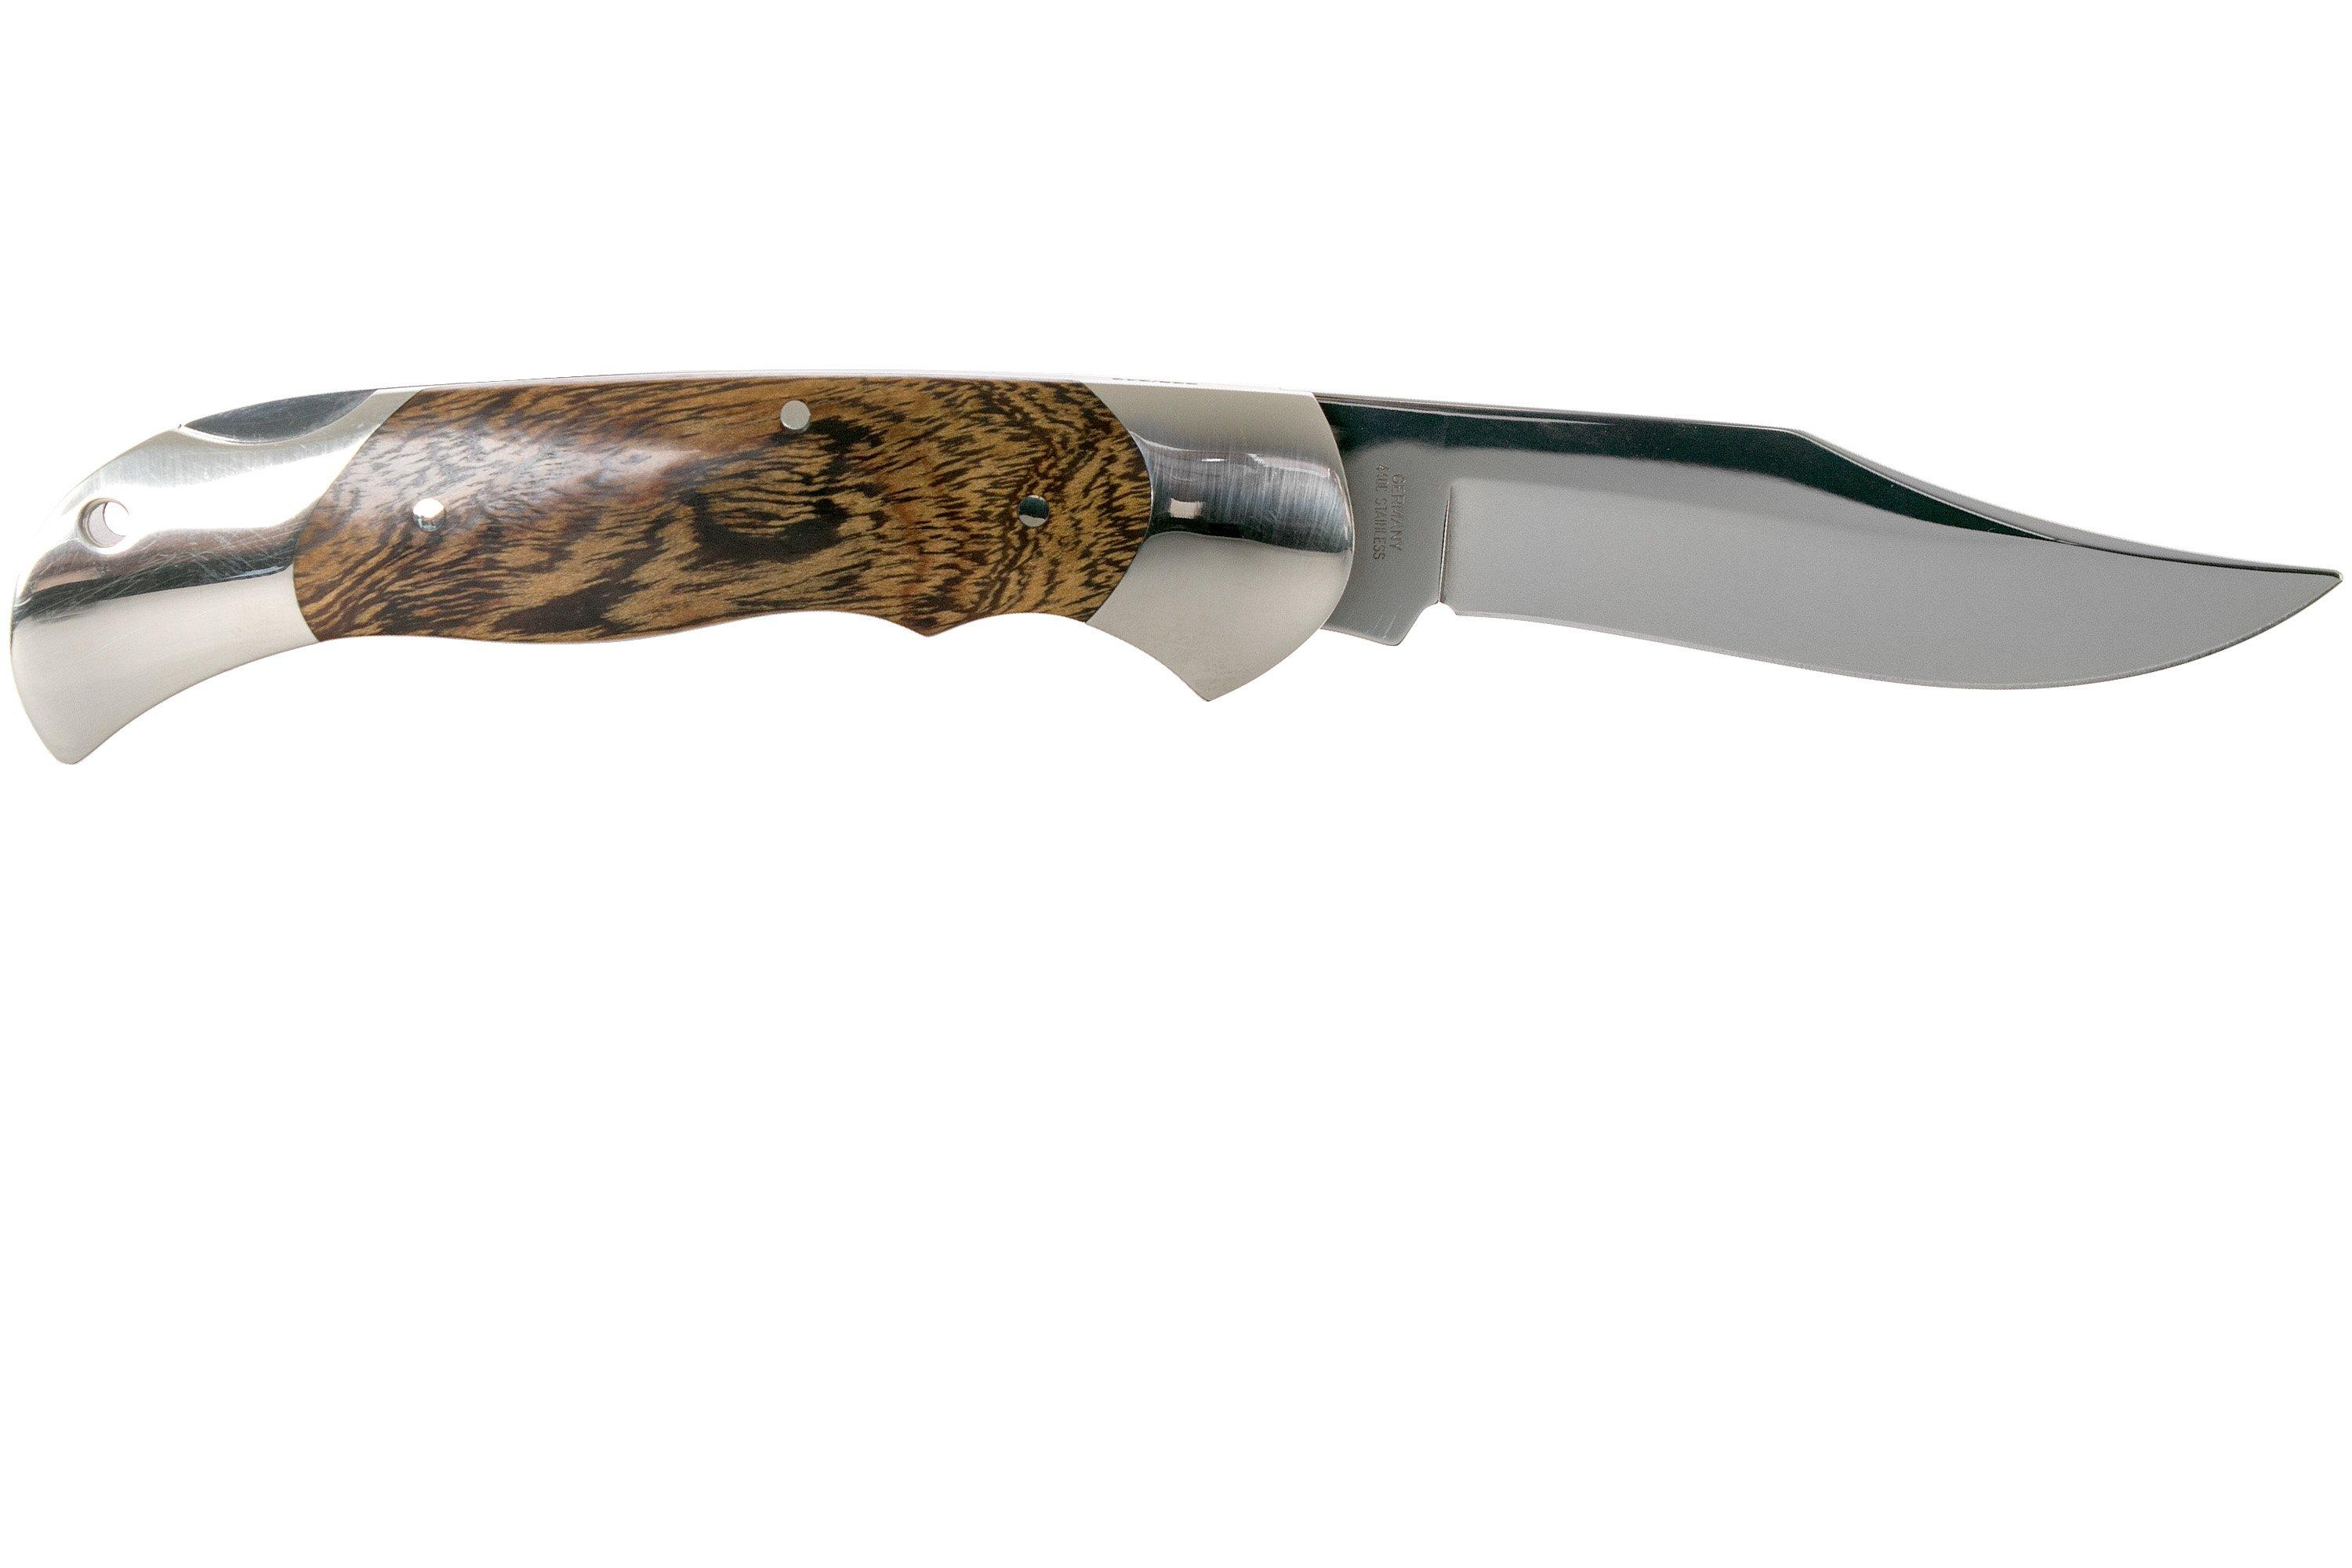 Böker Optima 1674 Desert Ironwood 113019 pocket knife with removable blade